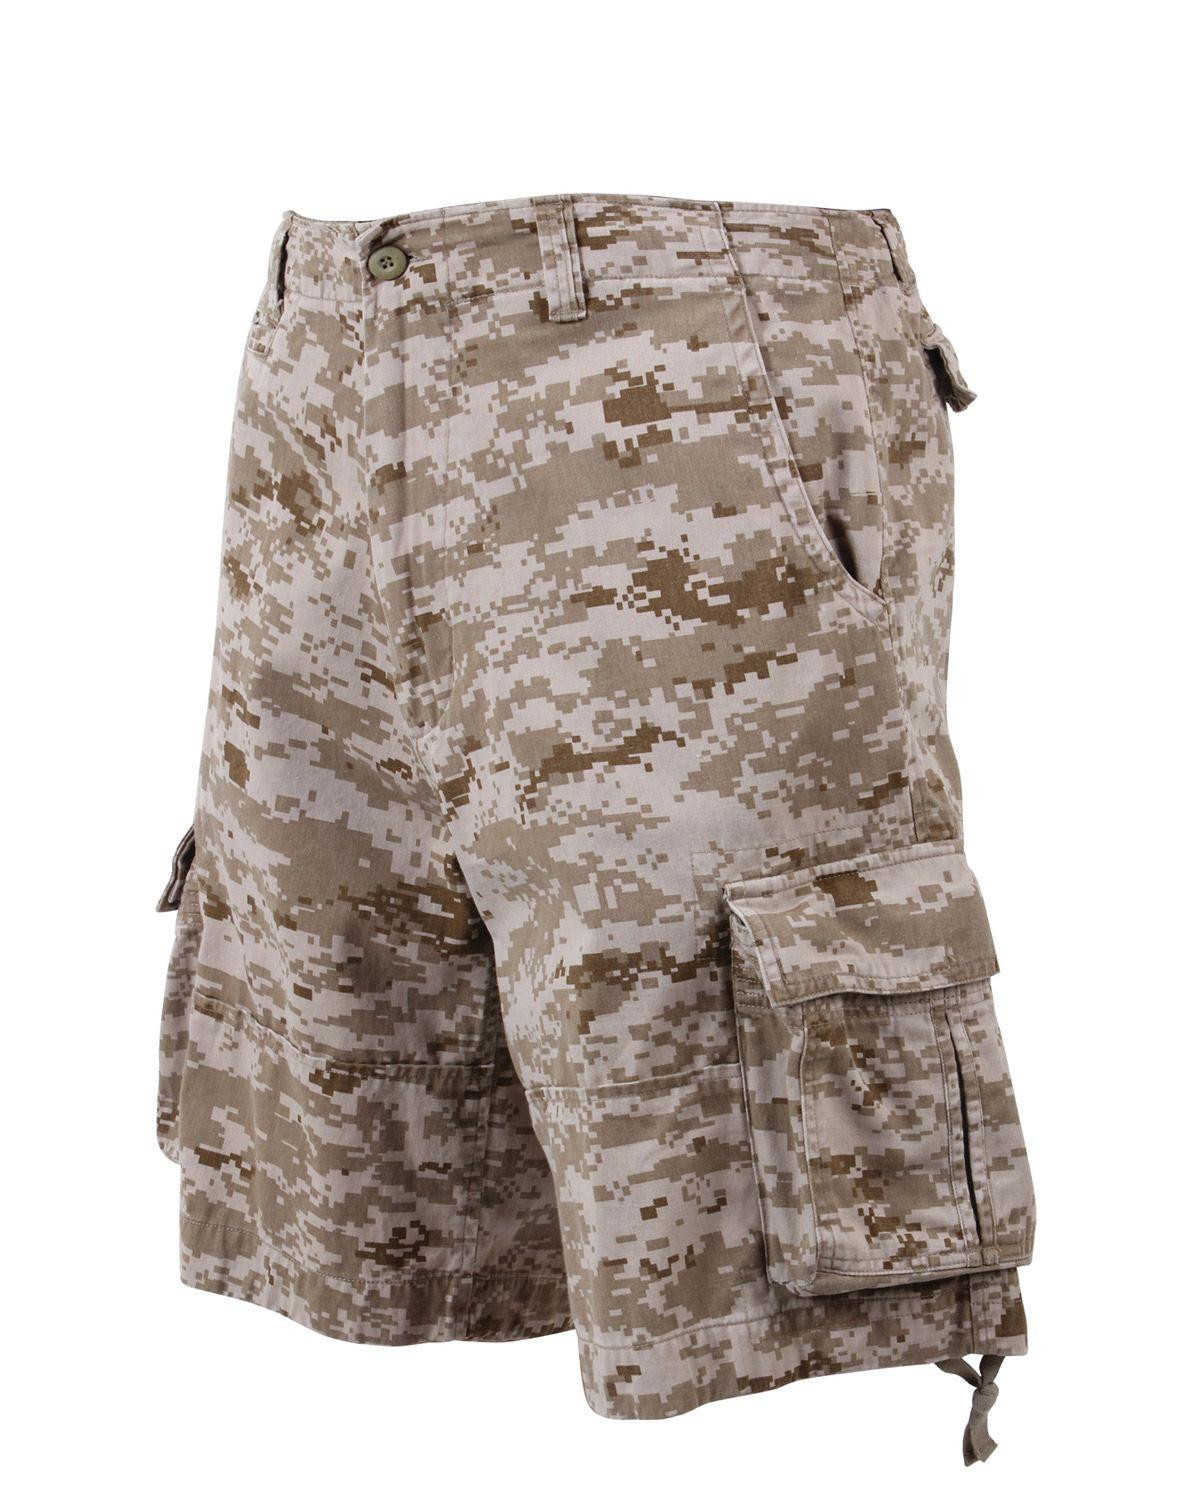 Rothco Vintage Infantry Shorts (Desert Digital Camo, XL)